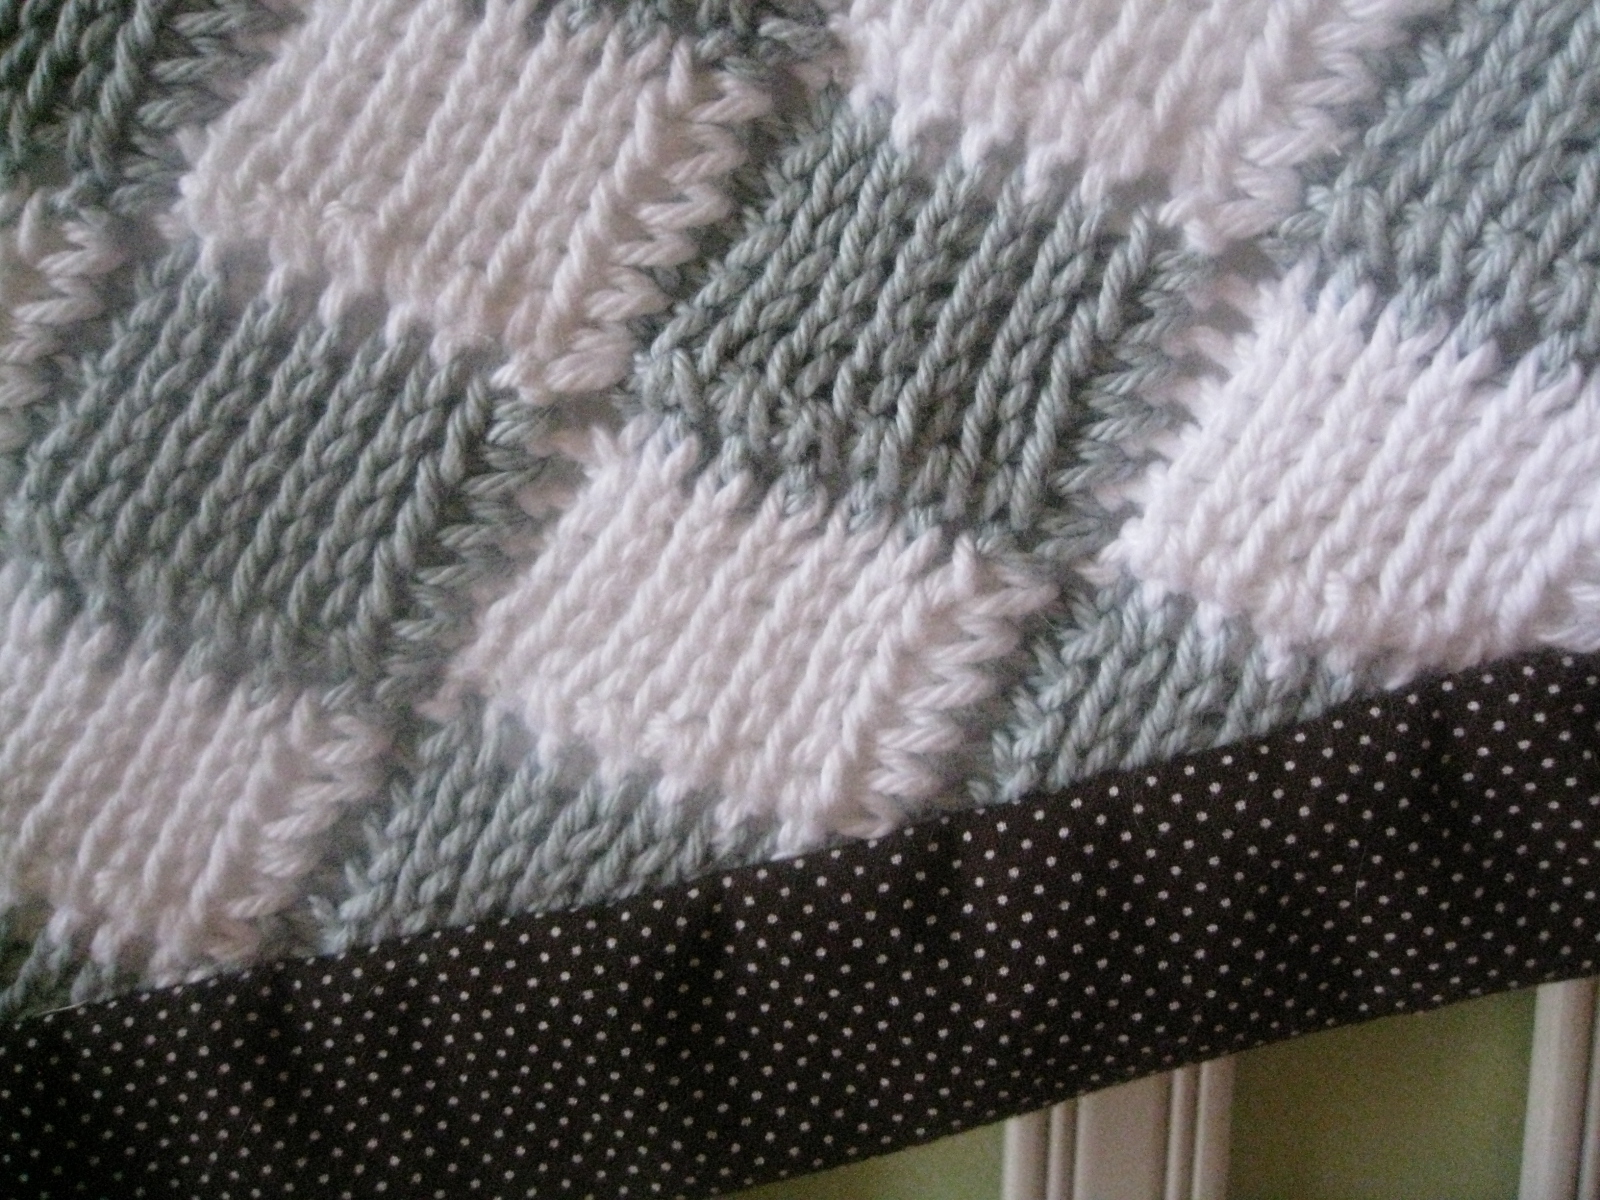 Crocheted baby blanket | Shop crocheted baby blanket sales